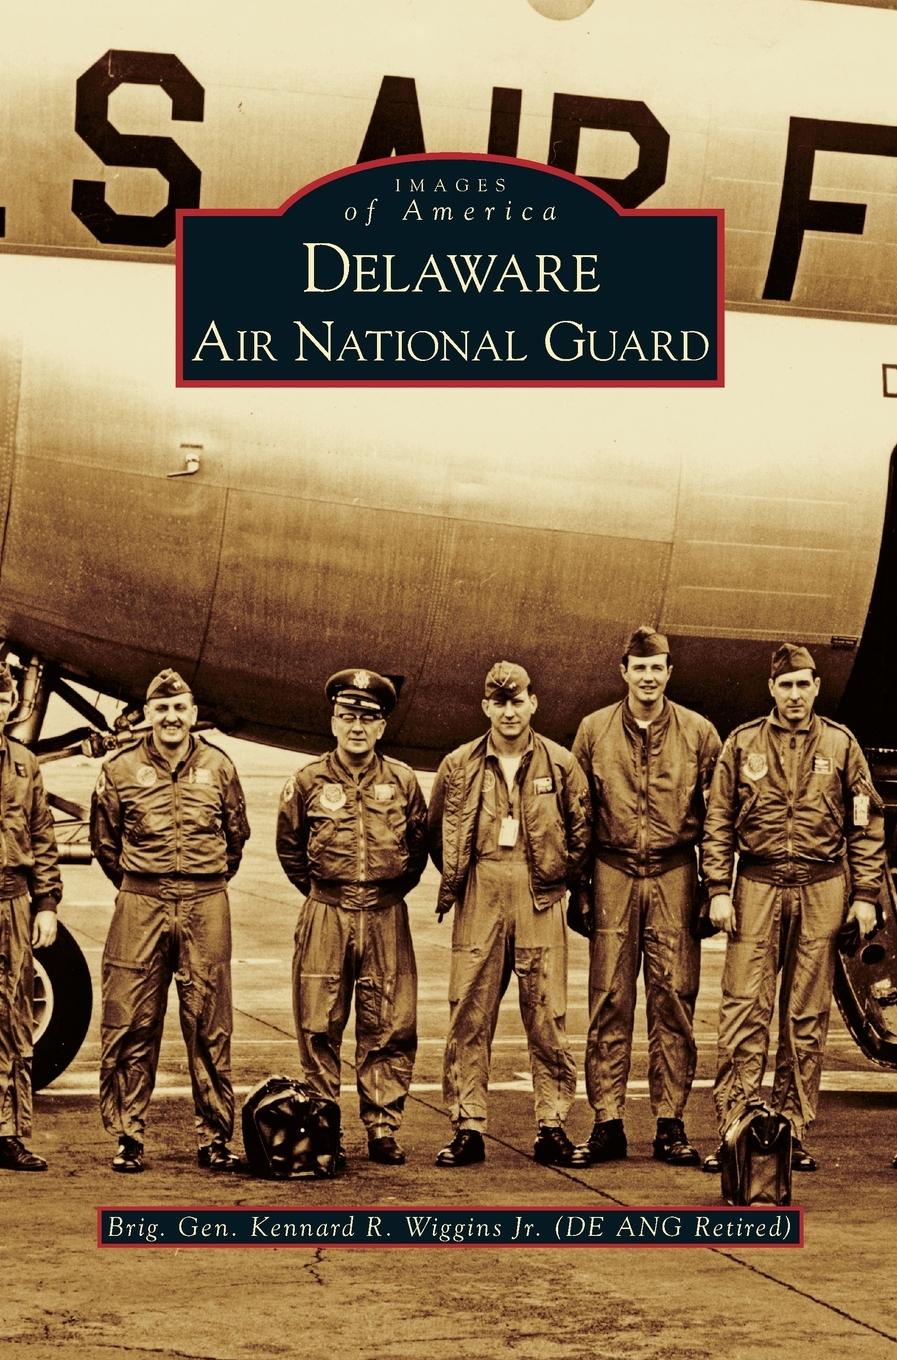 Delaware Air National Guard - Wiggins, Kennard R. Jr.